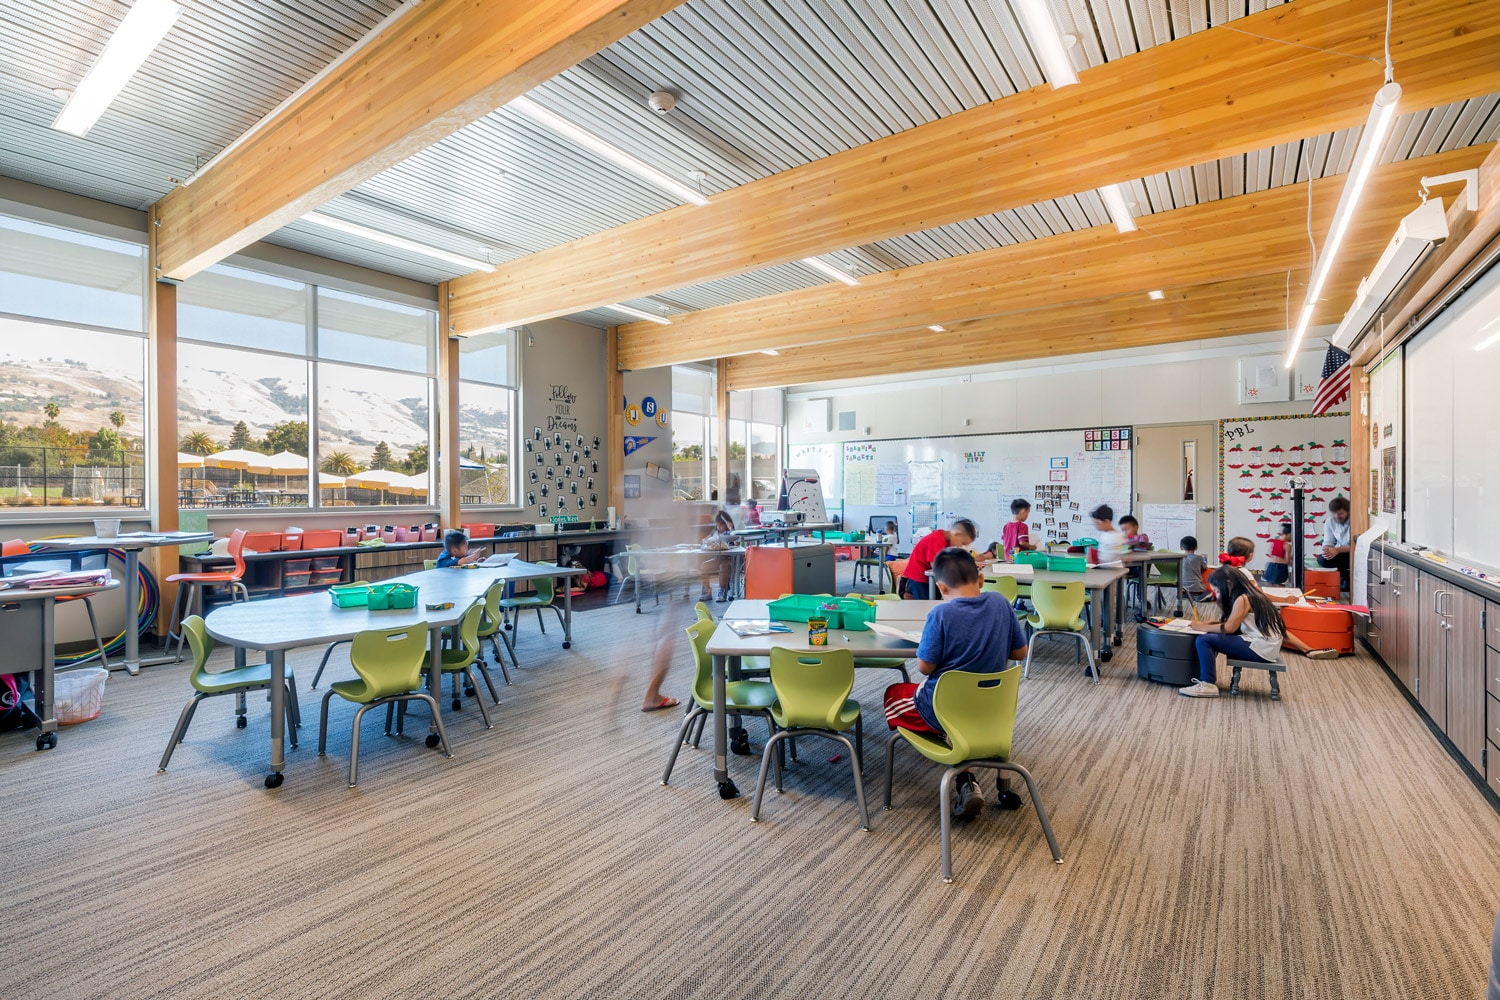 Acoustical Steel Decks Elevate Open School Design